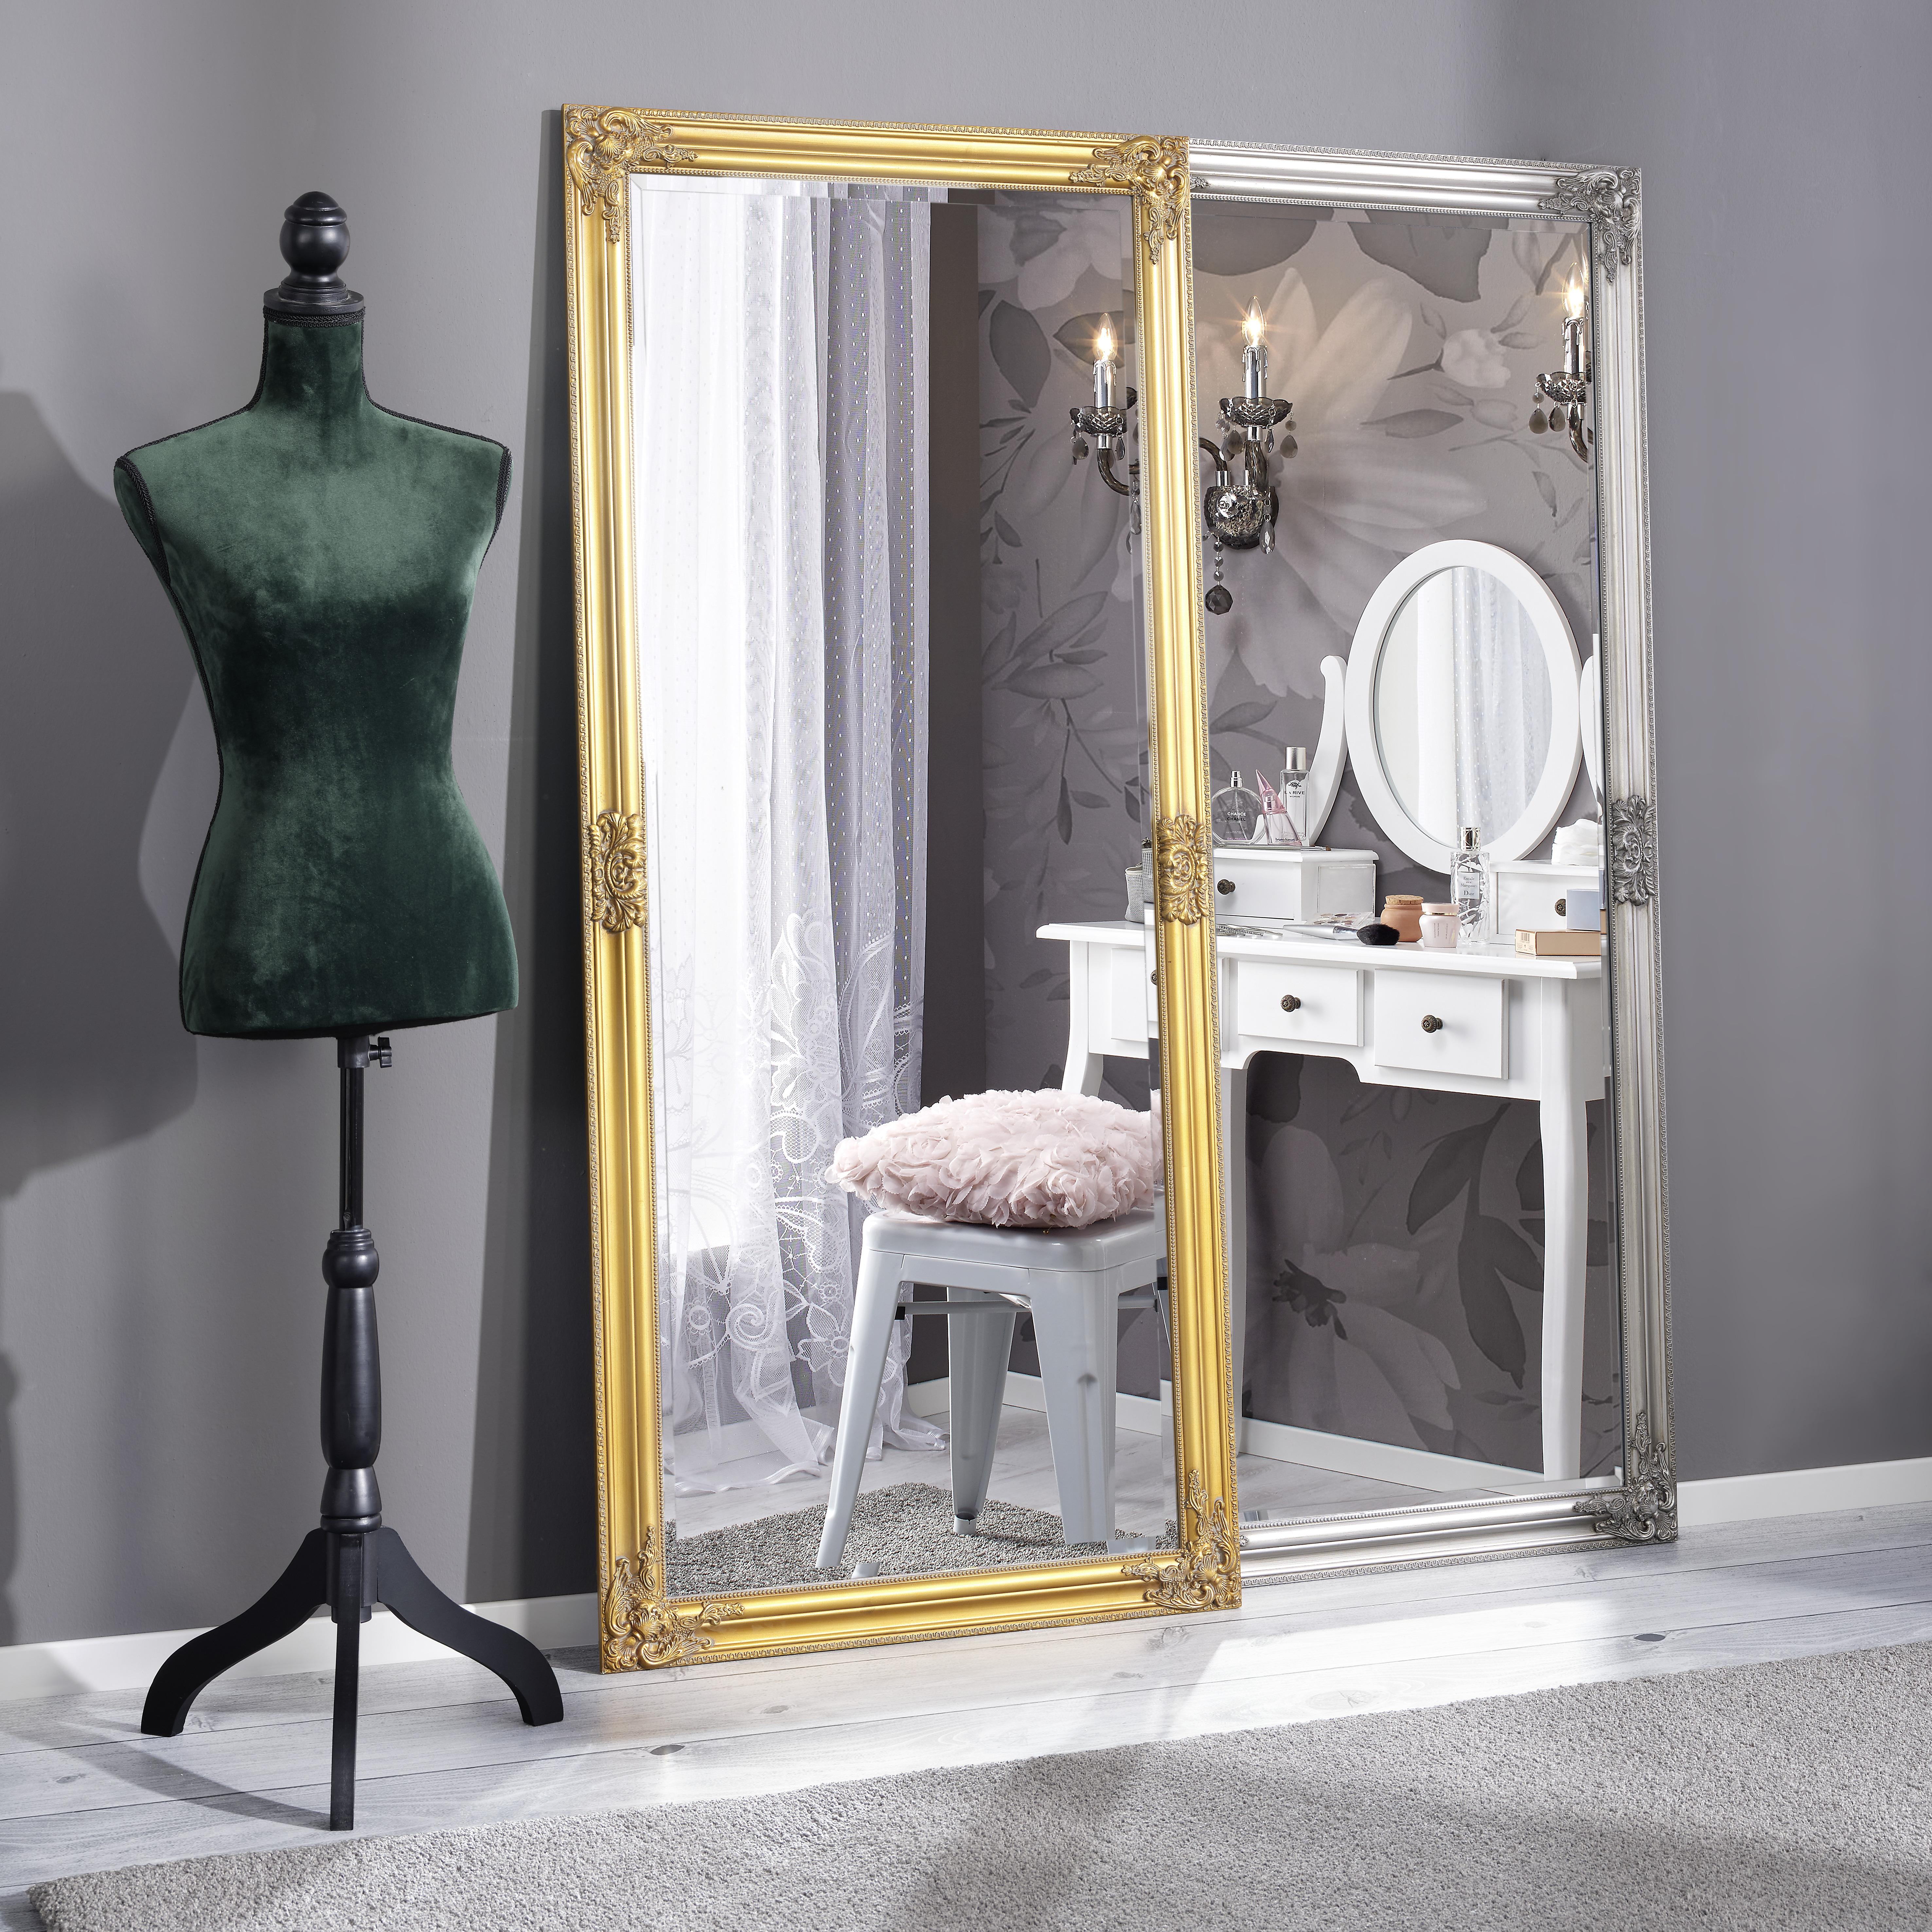 Ogledalo Zidno Barock - srebrne boje, Romantik / Landhaus, staklo/drvo (72/162/3cm) - Modern Living